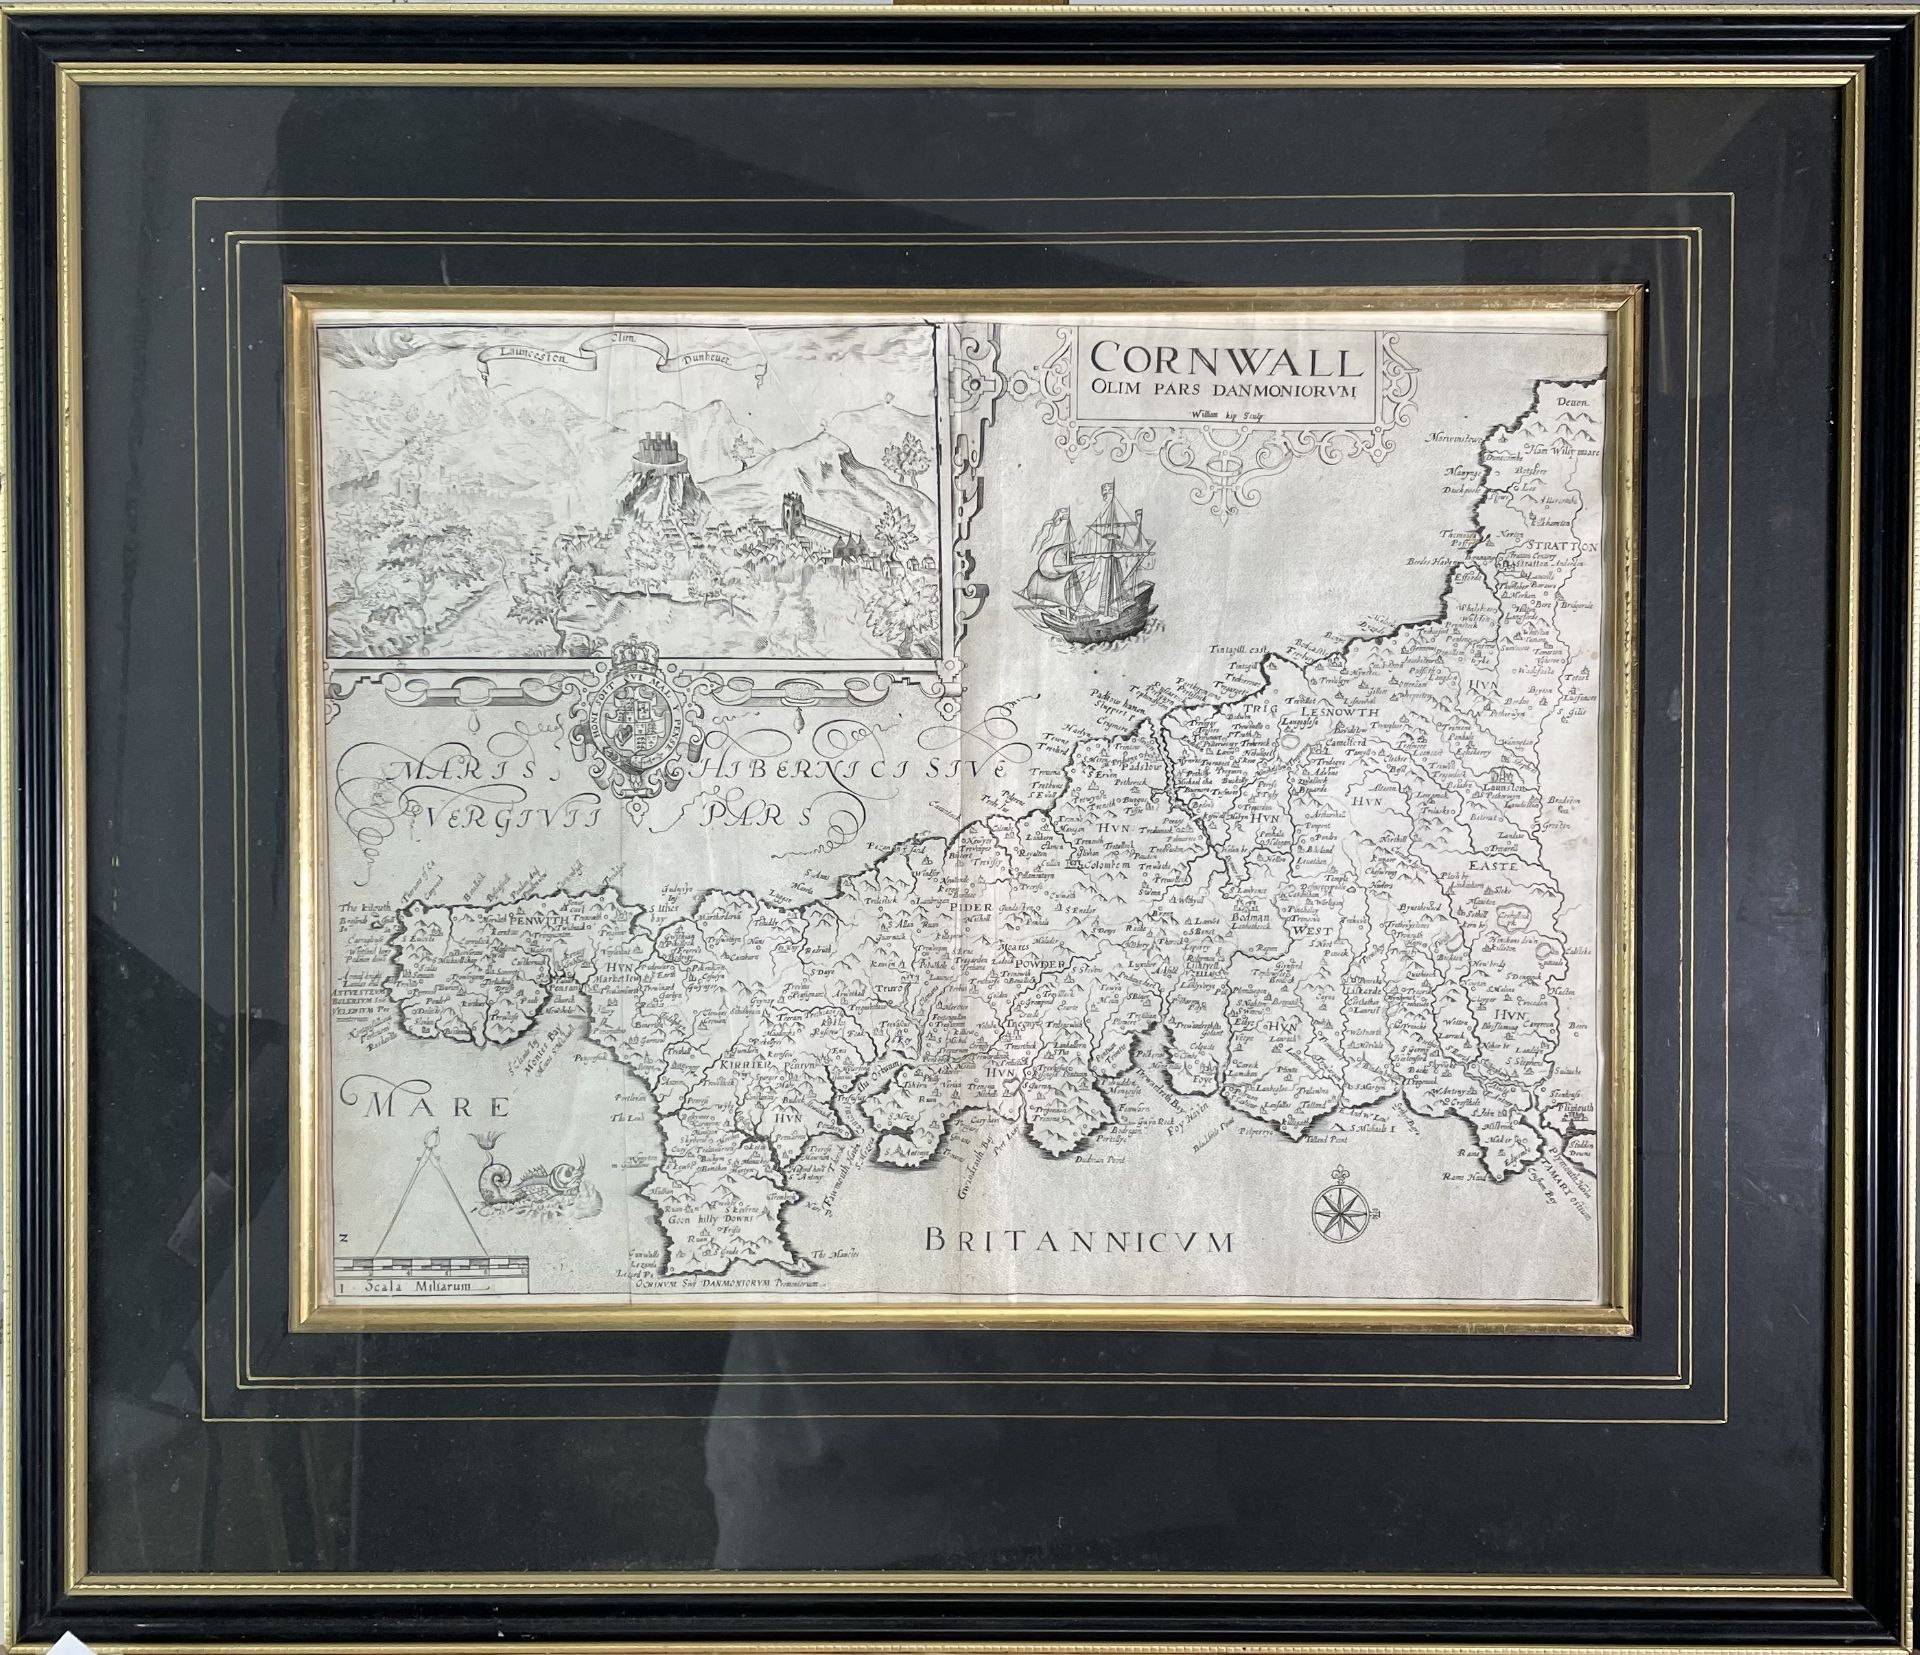 CHRISTOPHER SAXTON and WILLIAM KIP. 'Cornwall olim pars Danmoniorum.' Engraved map, inset view of - Image 2 of 2